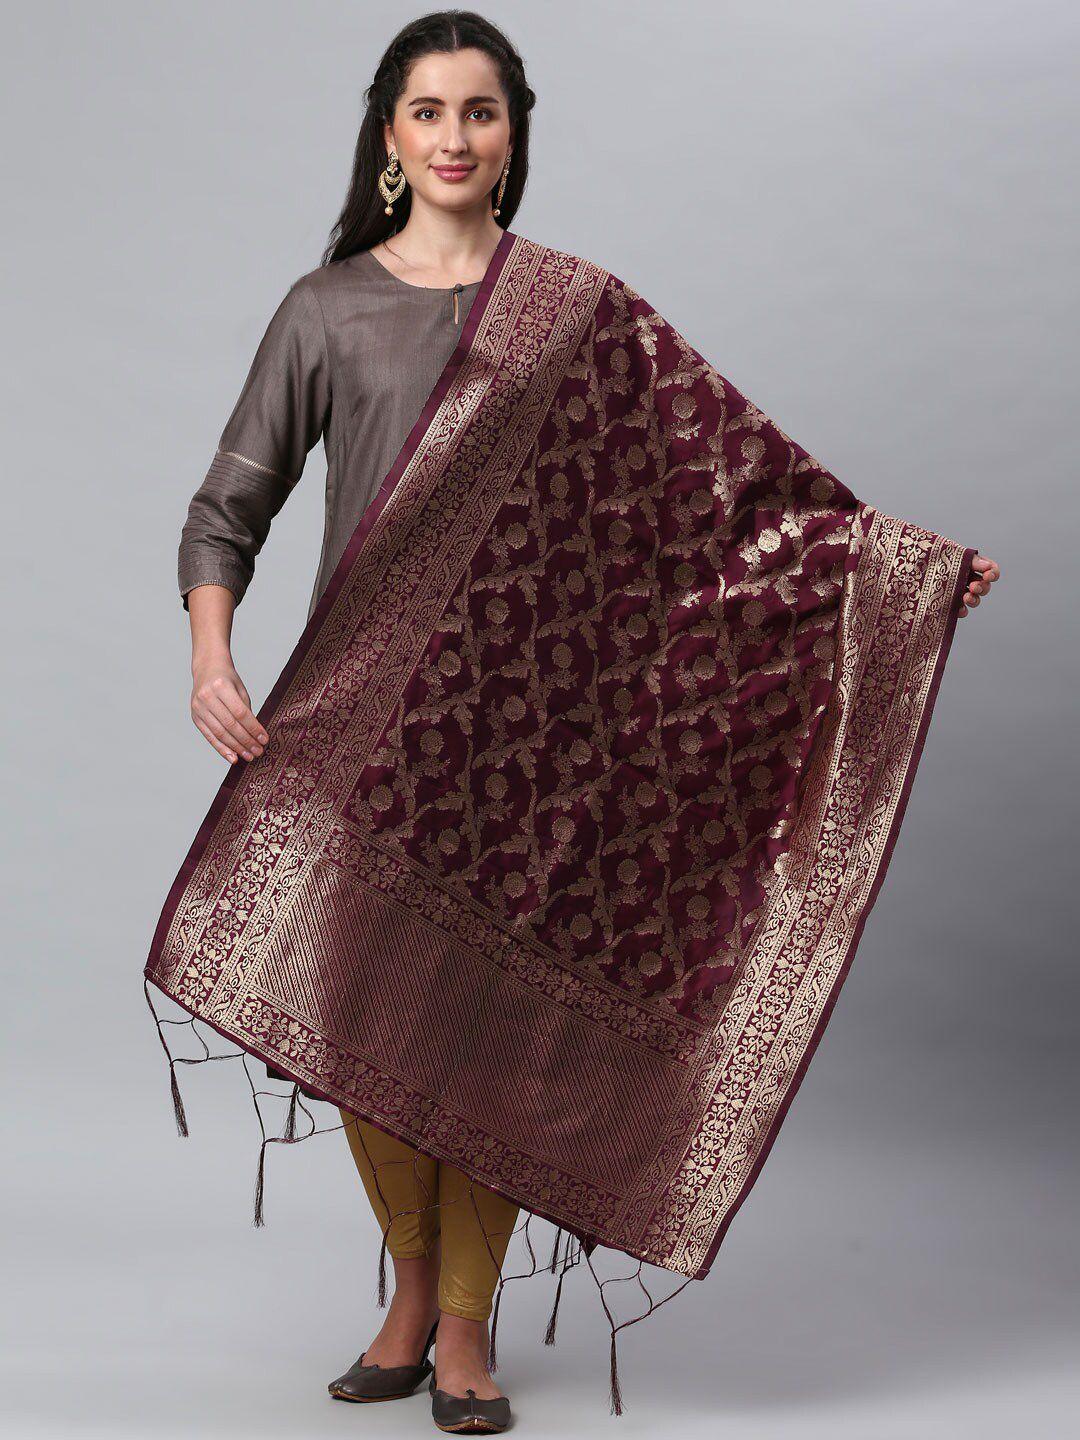 lilots-purple-&-gold-toned-ethnic-motifs-woven-design-dupatta